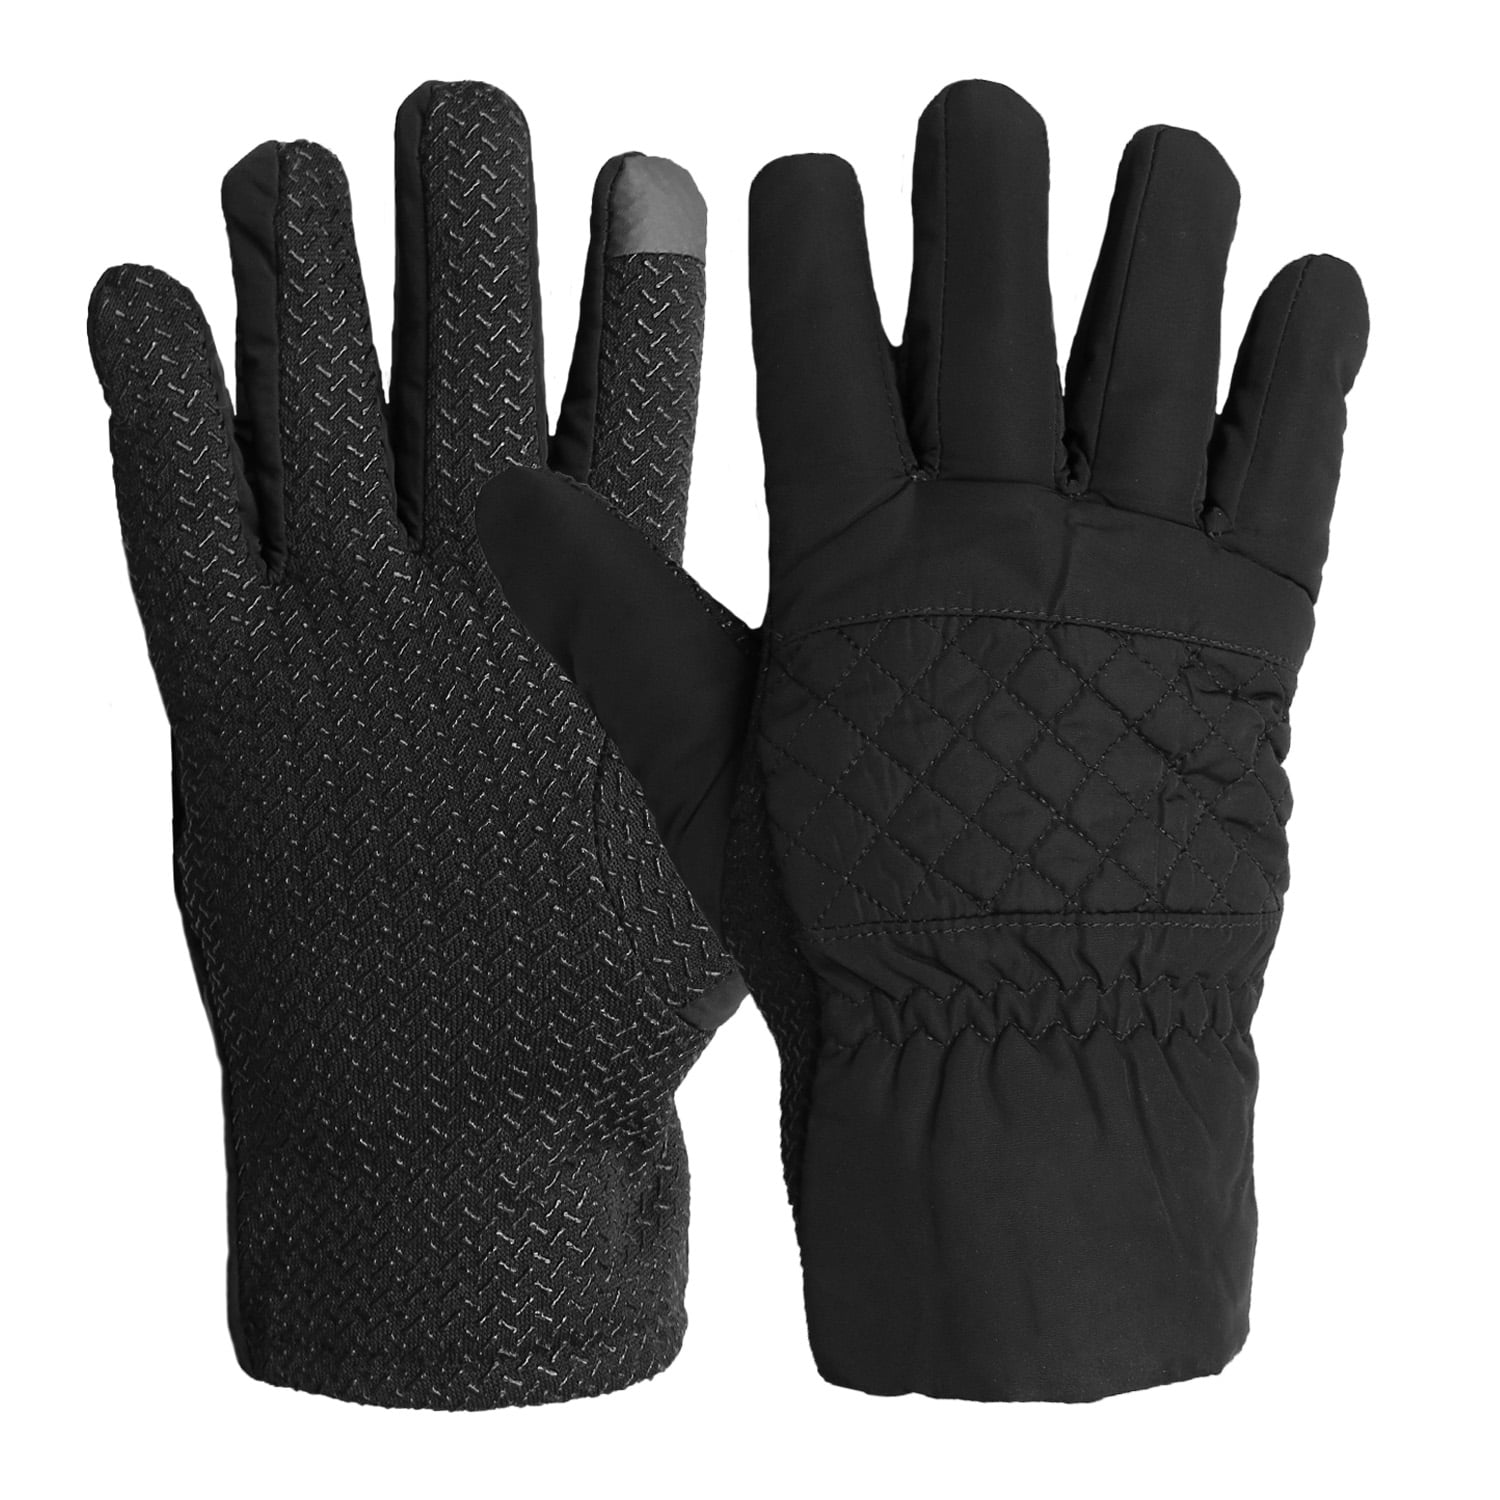 Skin tight gloves winter